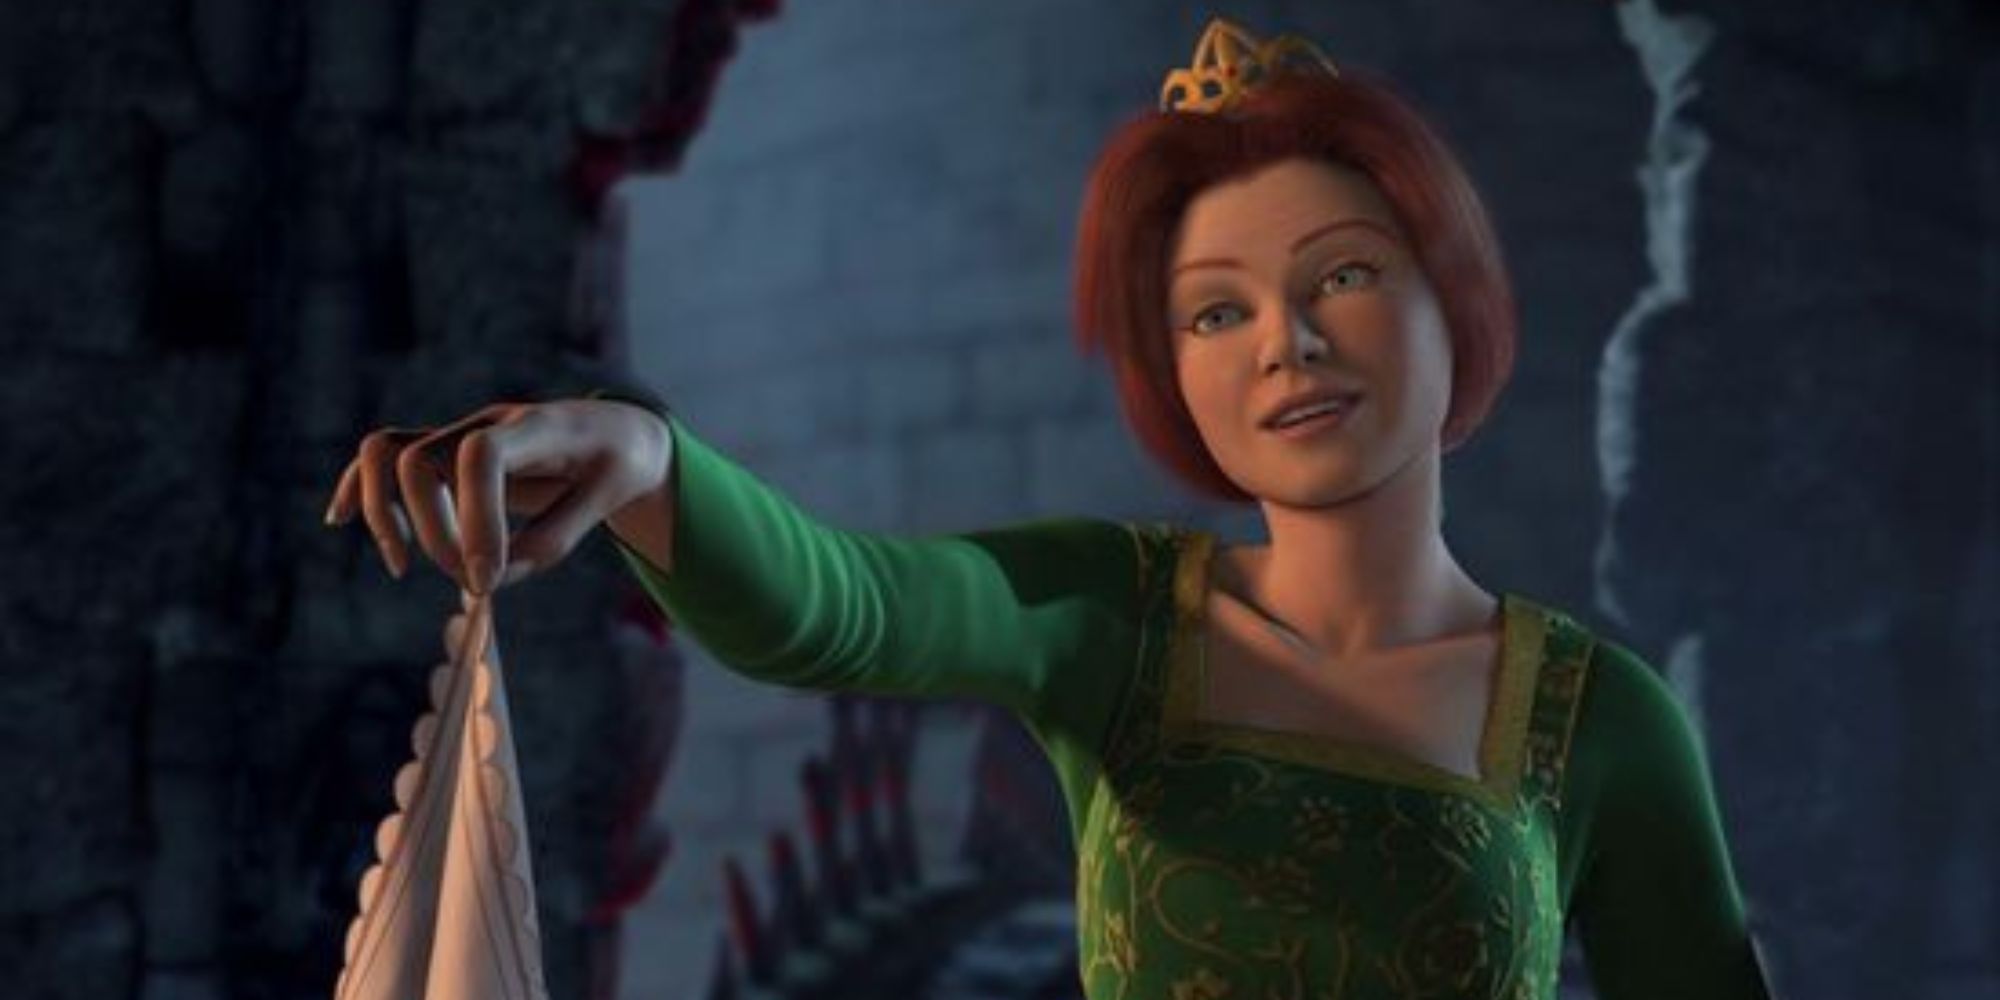 Shrek's Princess Fiona presenting her handkerchief towards Shrek